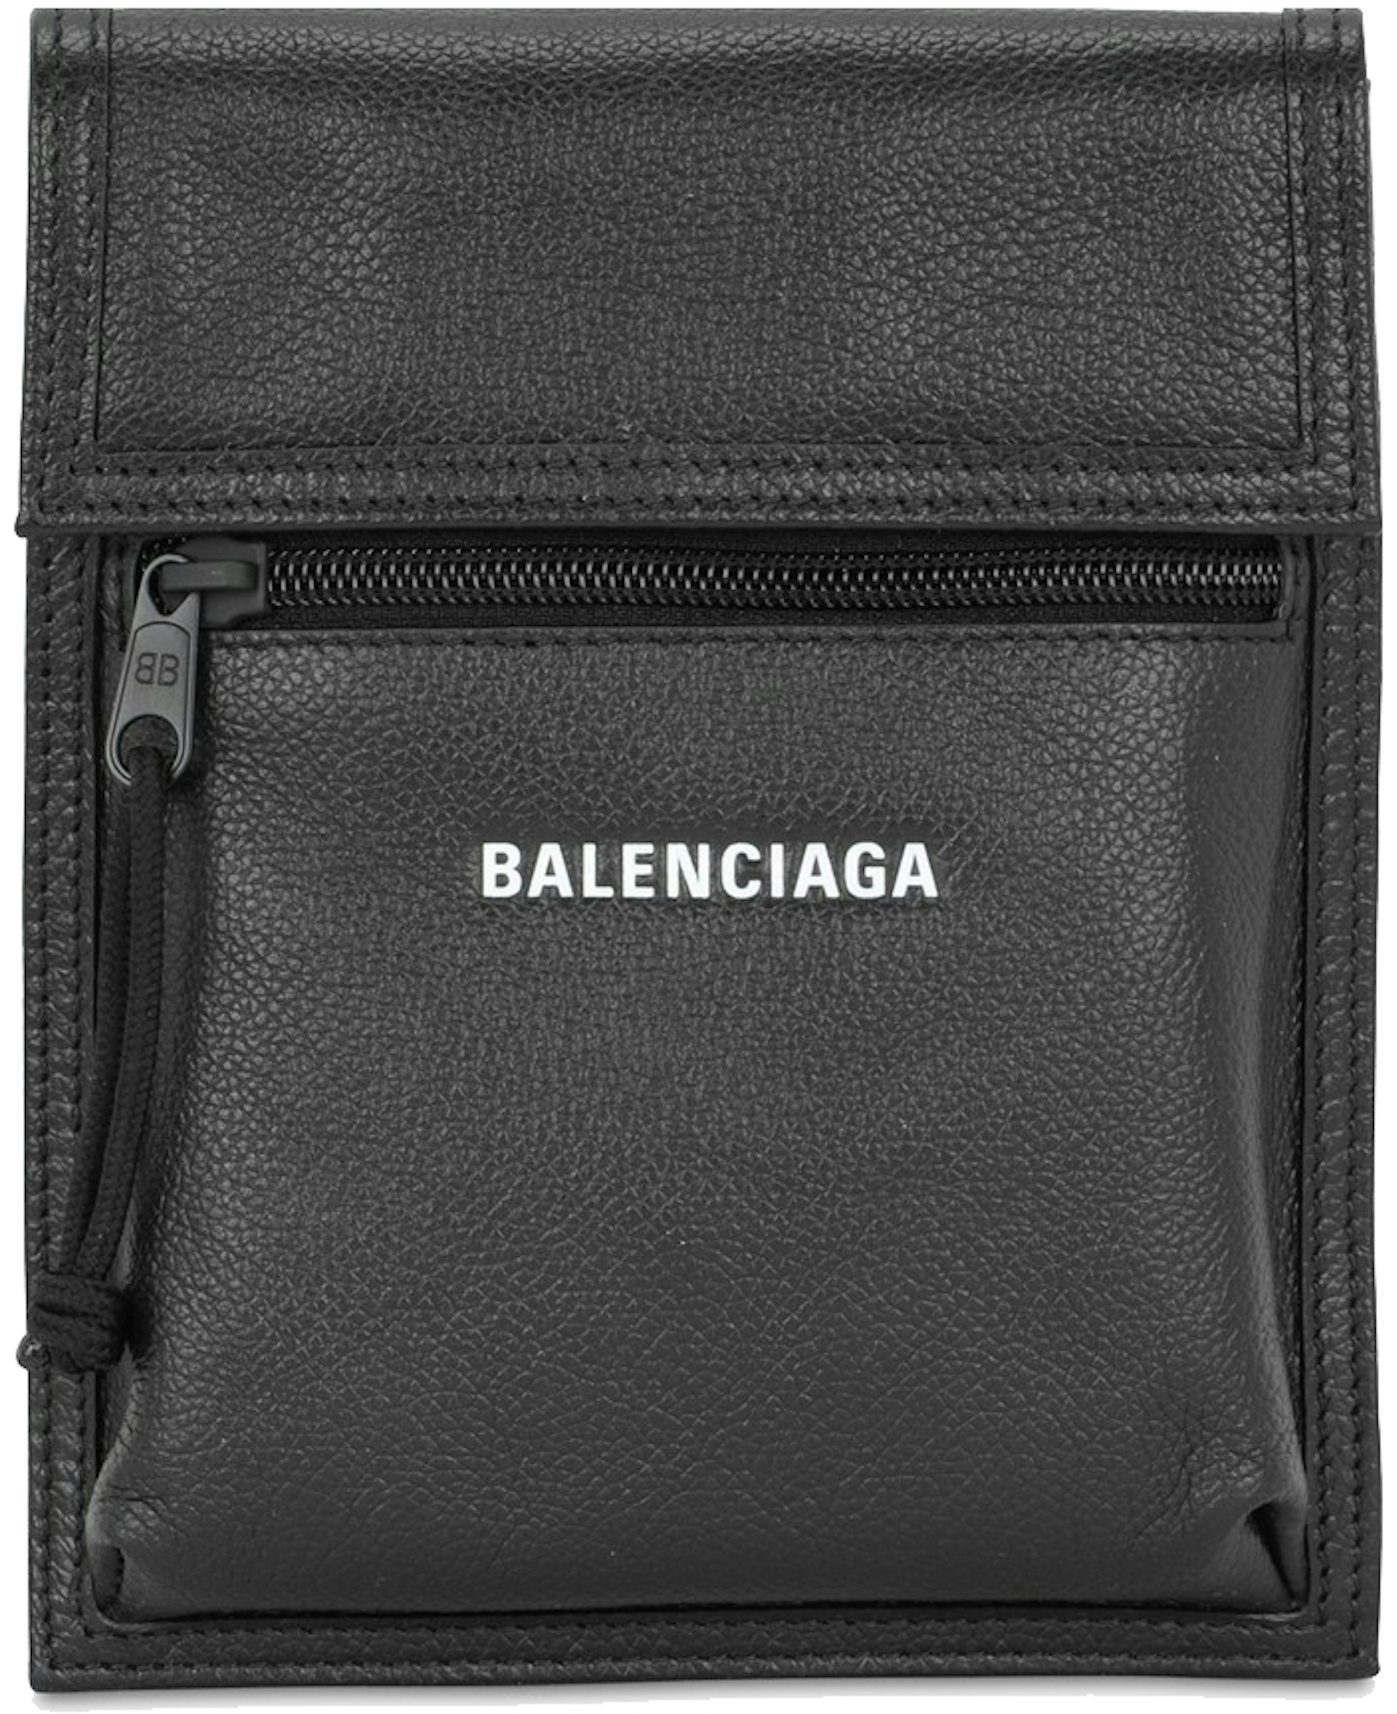 Balenciaga Trash Bag Large Pouch - Black